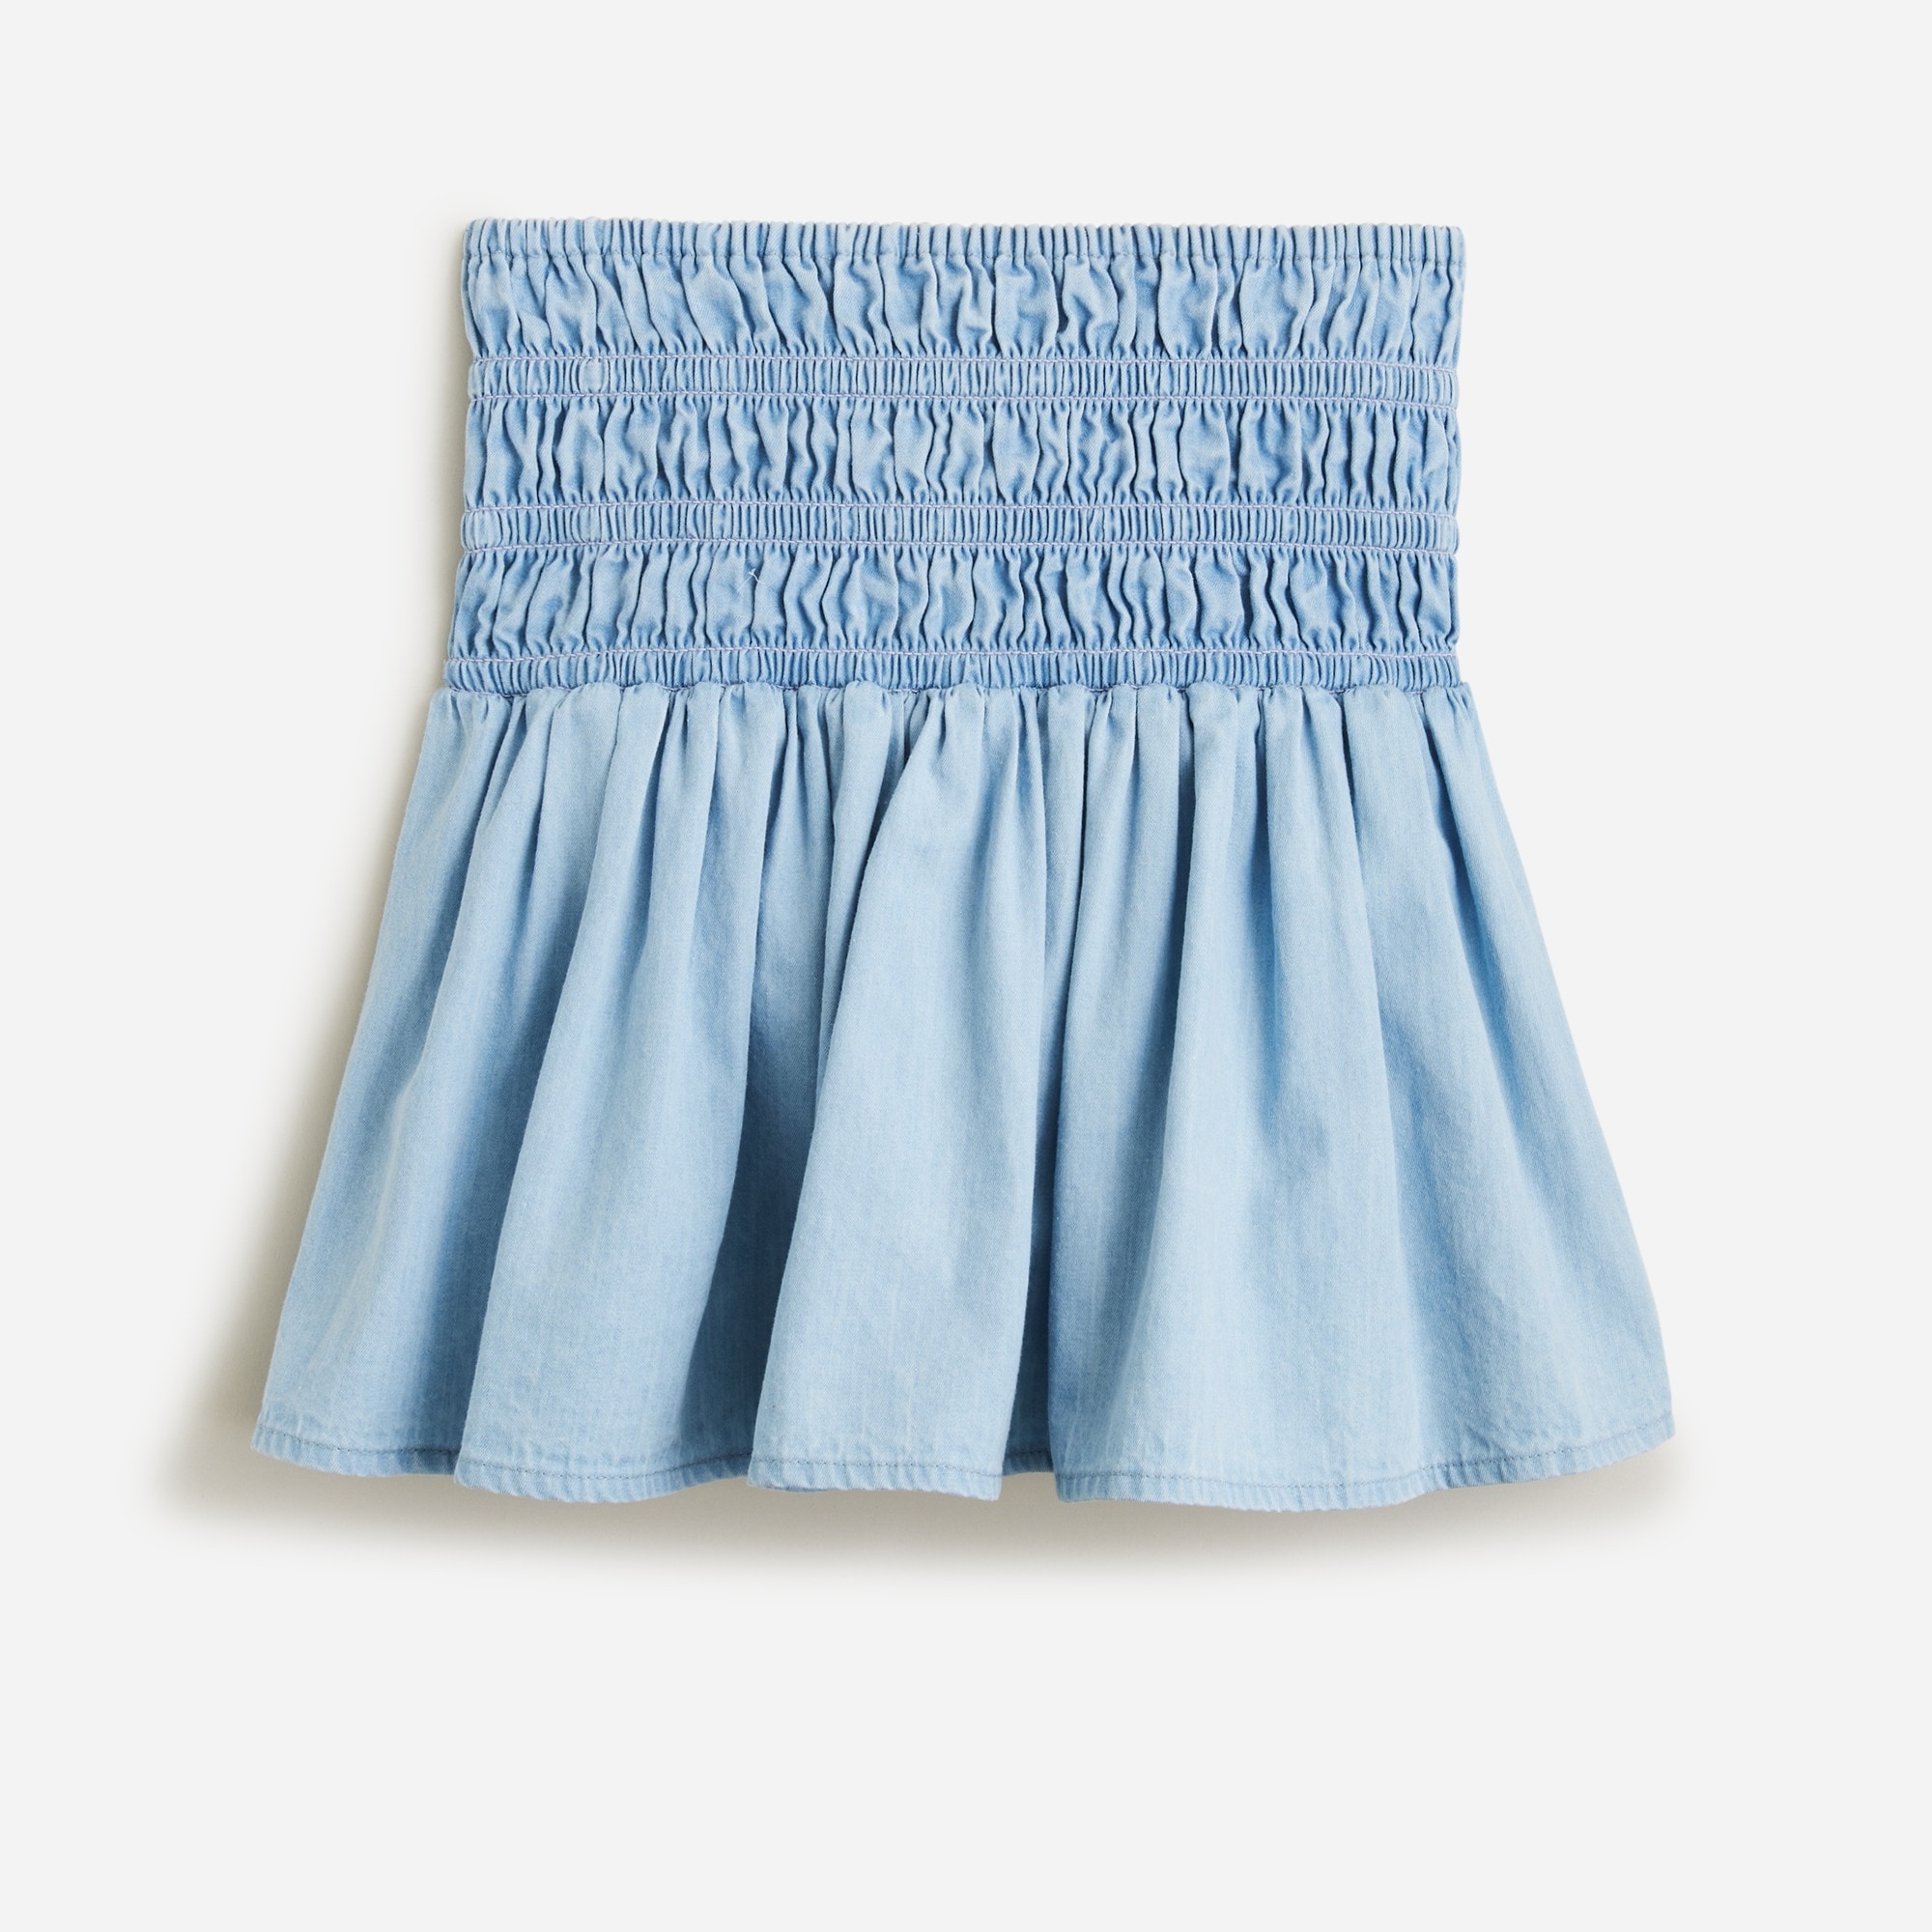  Girls' smocked chambray skirt